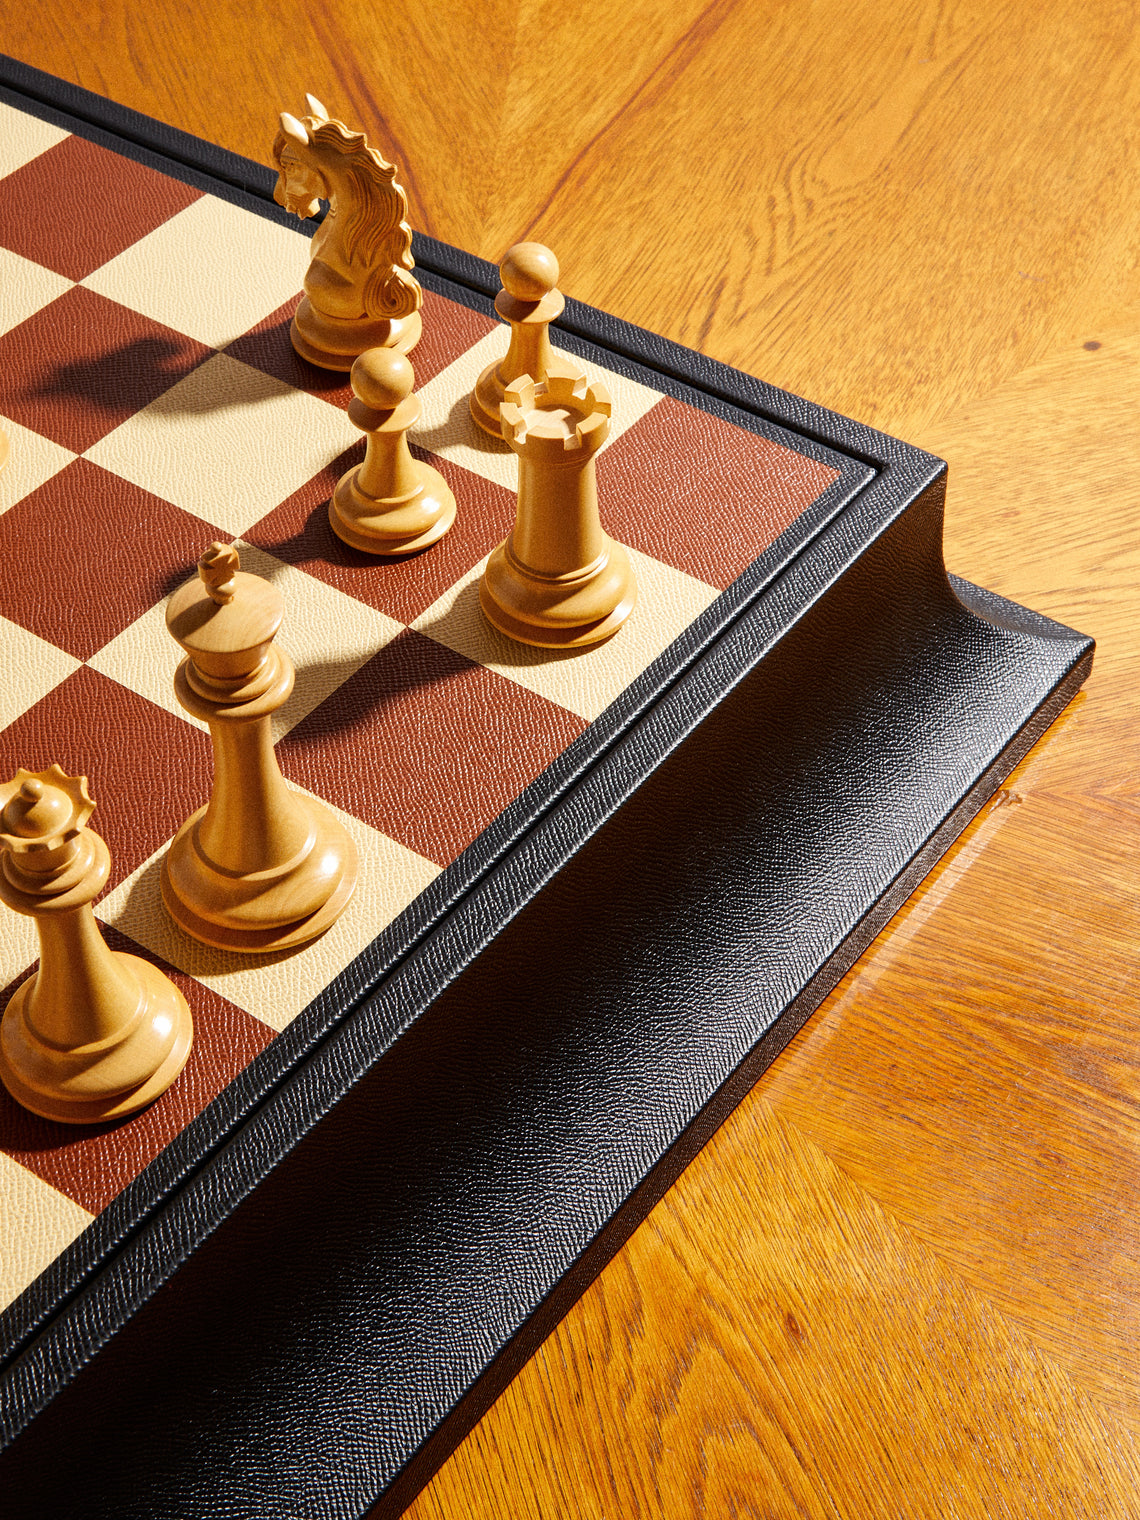 Geoffrey Parker - Championship Staunton Leather Chess Set - Black - ABASK